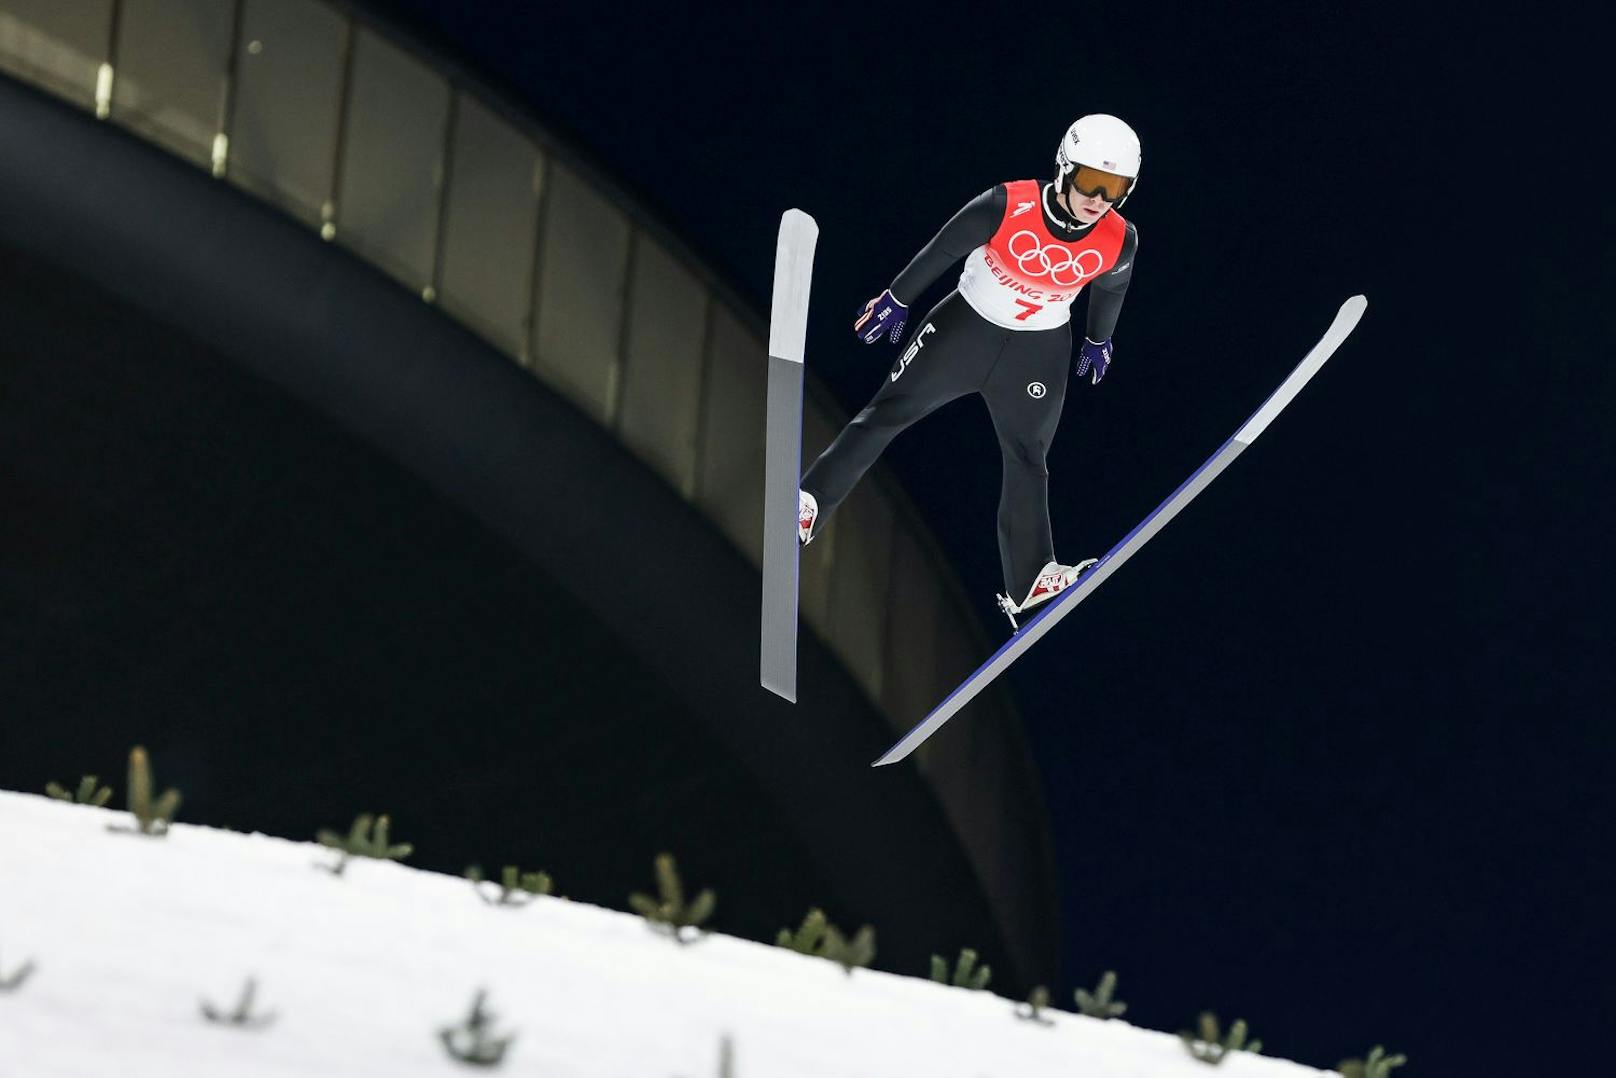 Olympia-Skispringer (24) bei Unfall verstorben